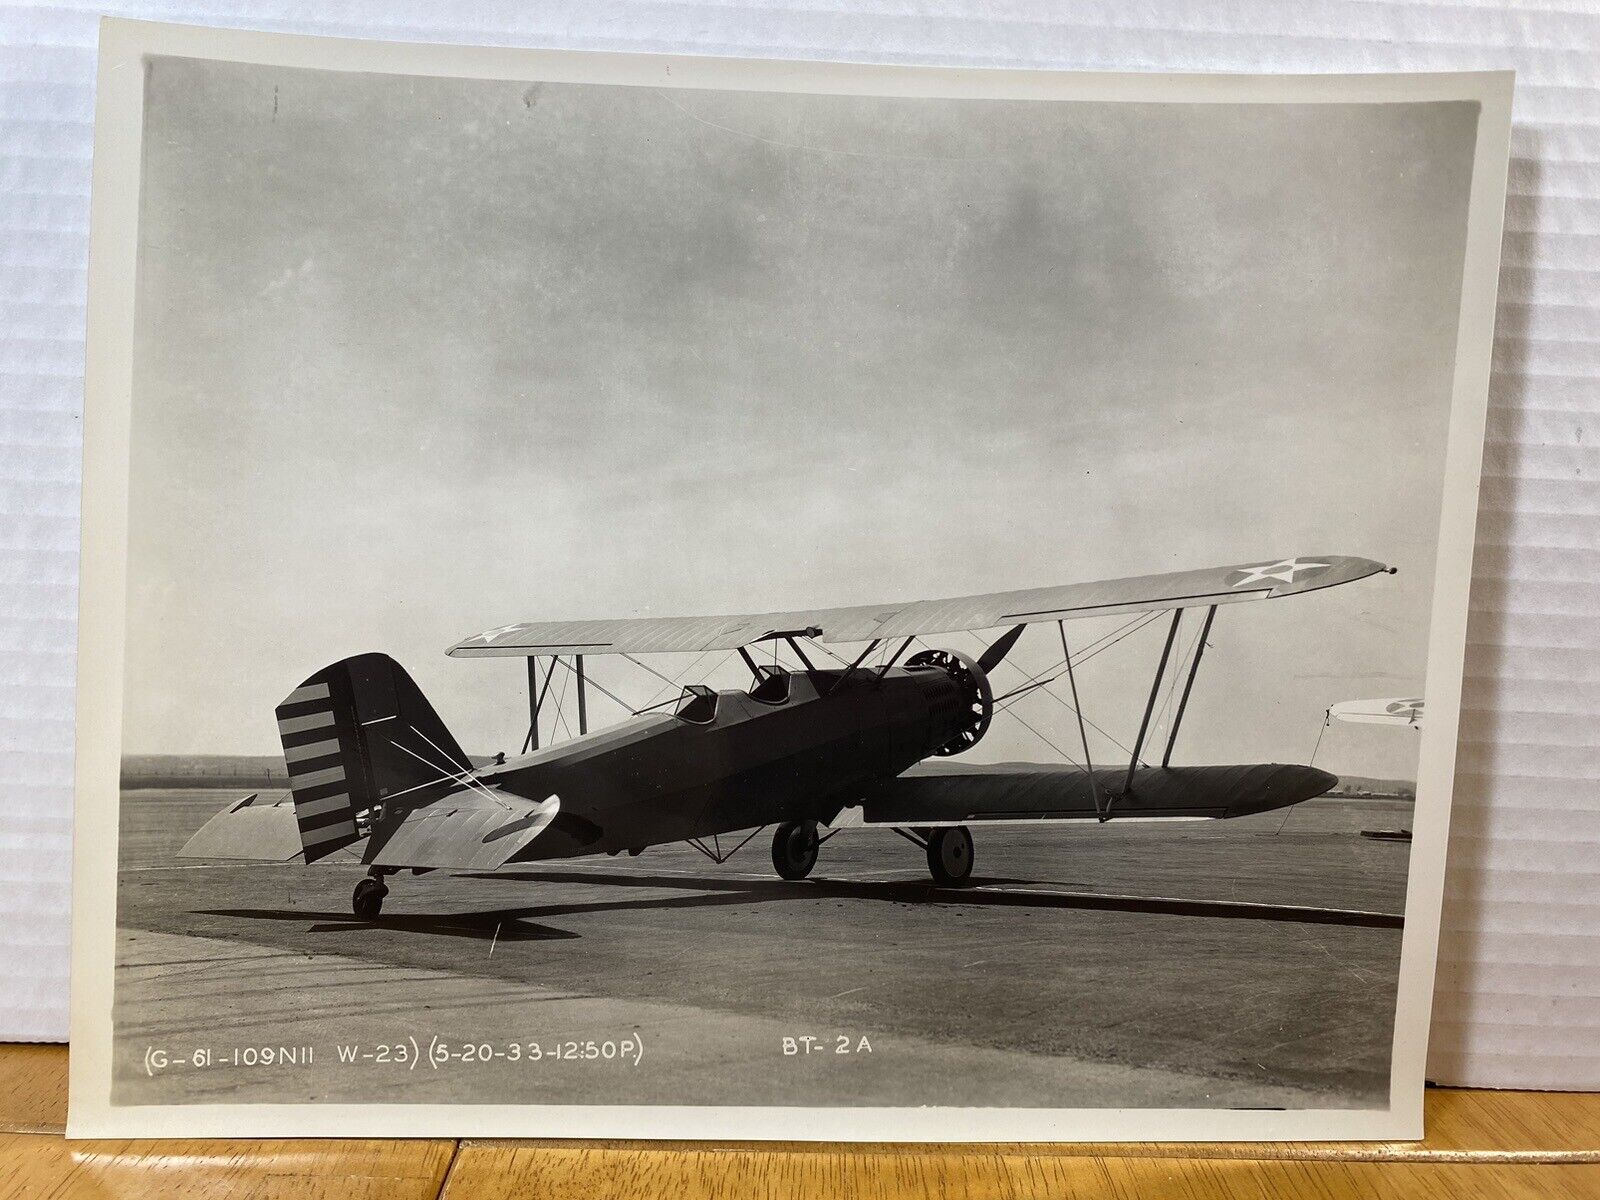 Douglas BT-2 biplane Observation Aircraft VTG Photo Print.